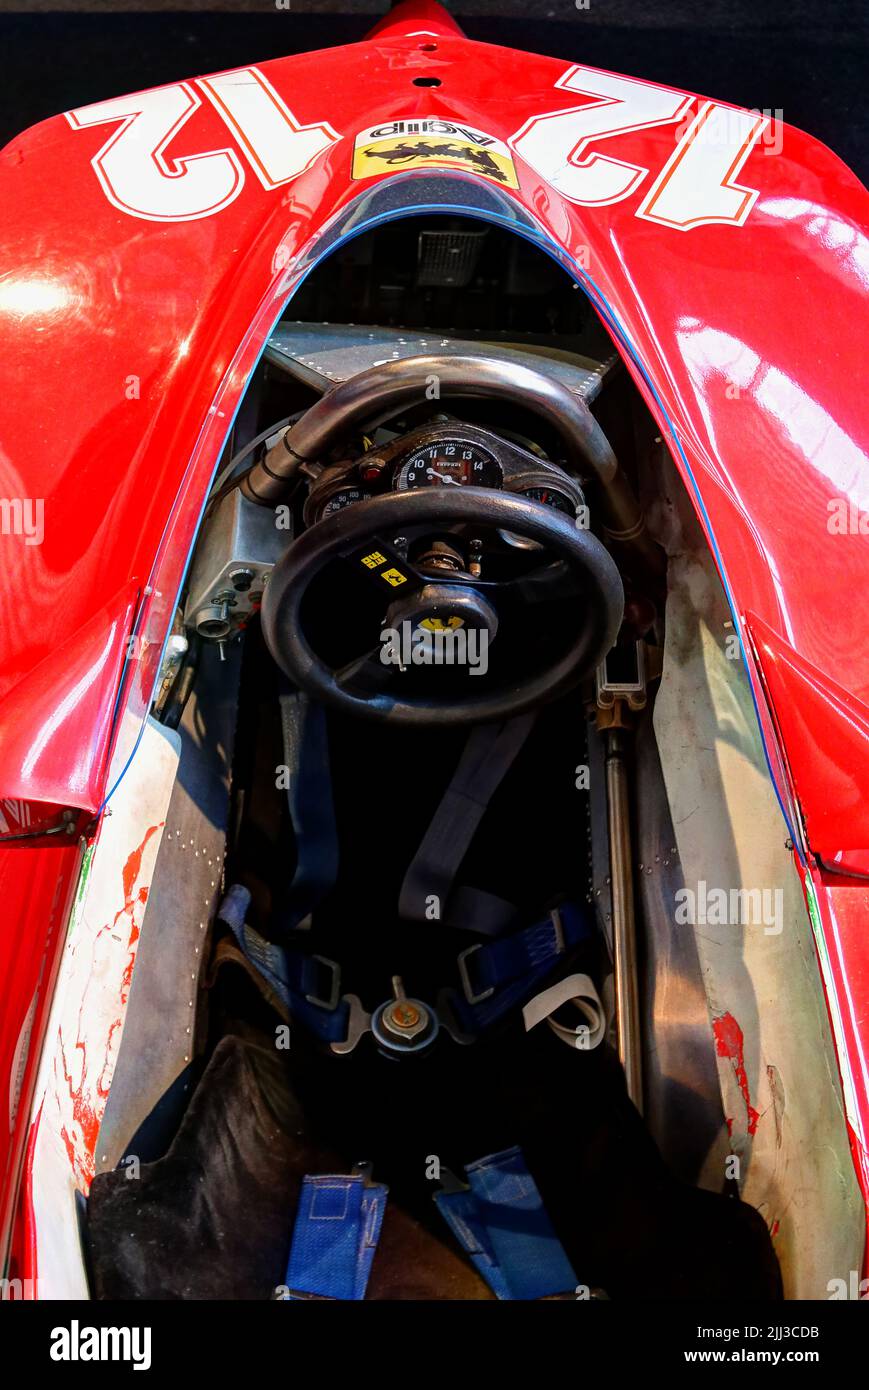 Nonantola (Módena) Italia, 2022 de julio - Ferrari 312 T4 (1979) coche de época del conductor canadiense Gilles Villeneuve en el Museo Giacobazzi Foto de stock